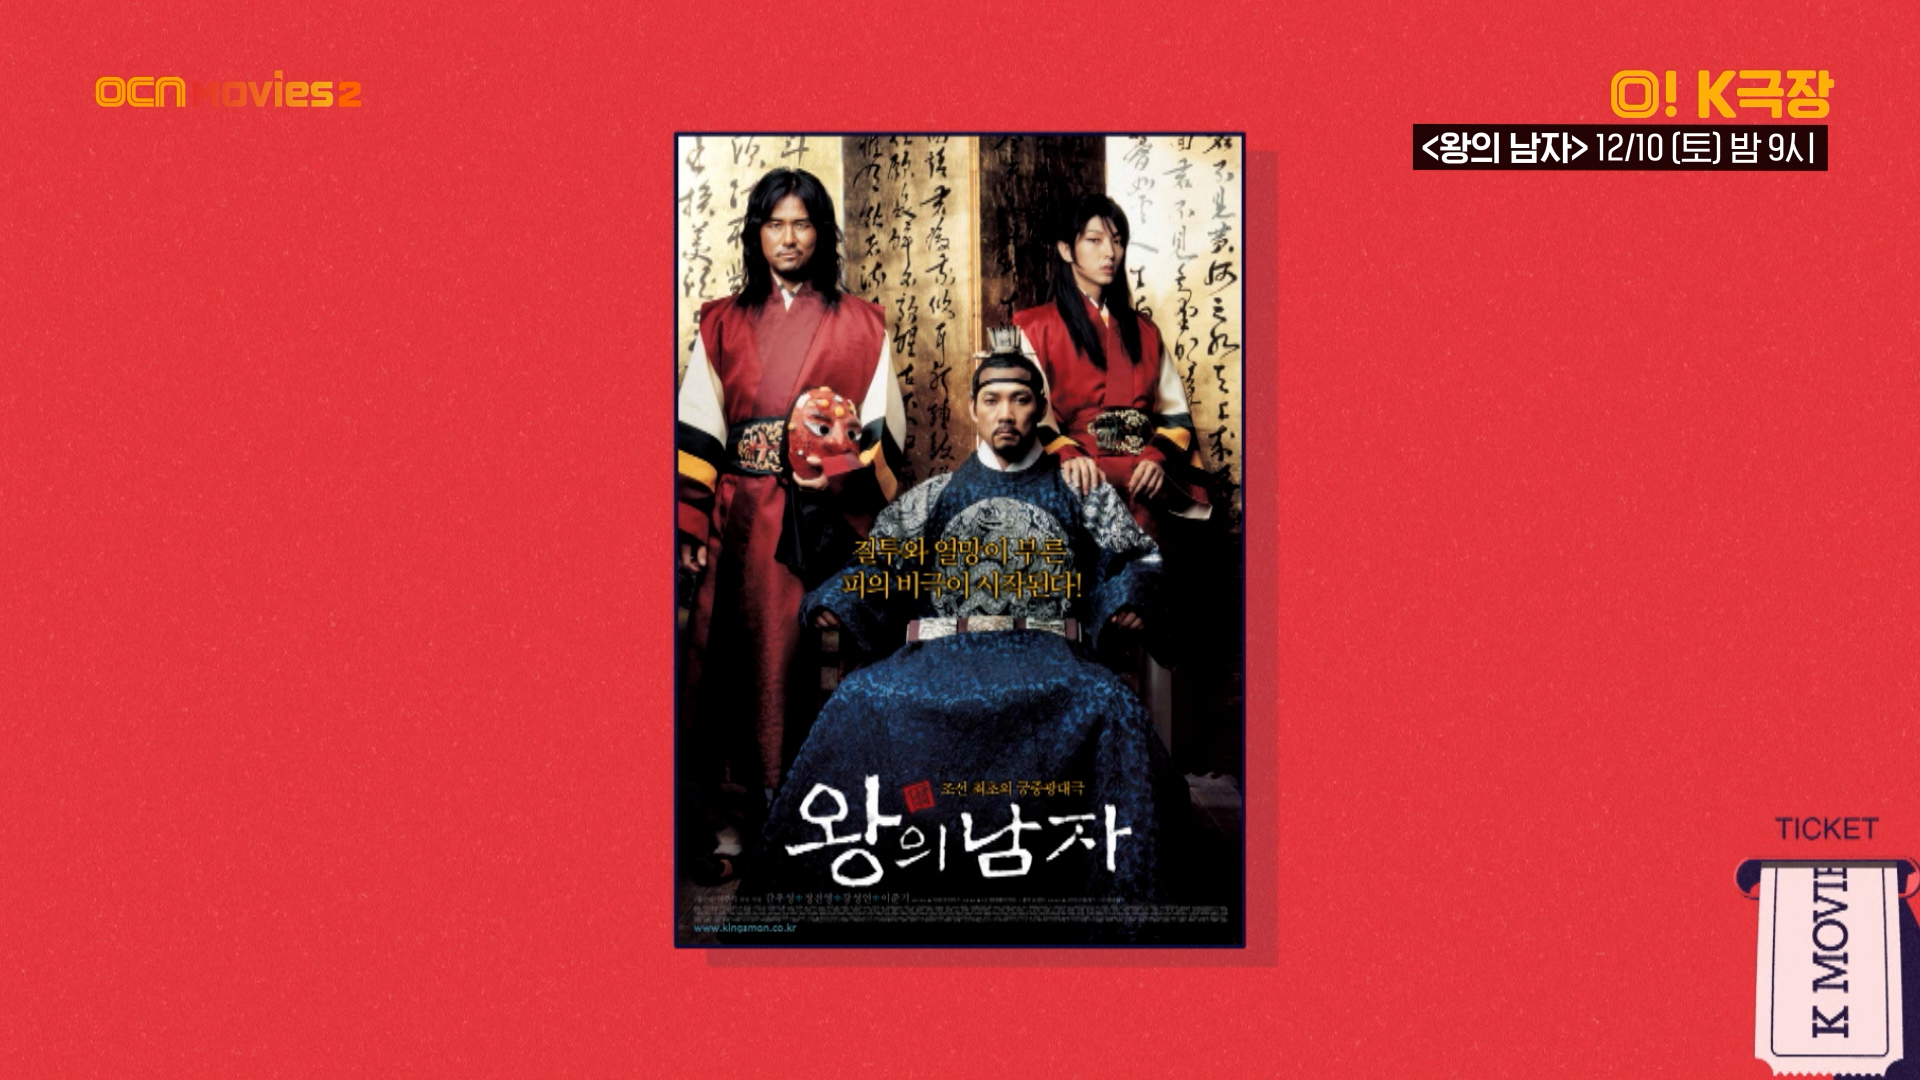 OCN Movies2 I [O! K극장] #왕의남자 12/10 (토) 밤 9시